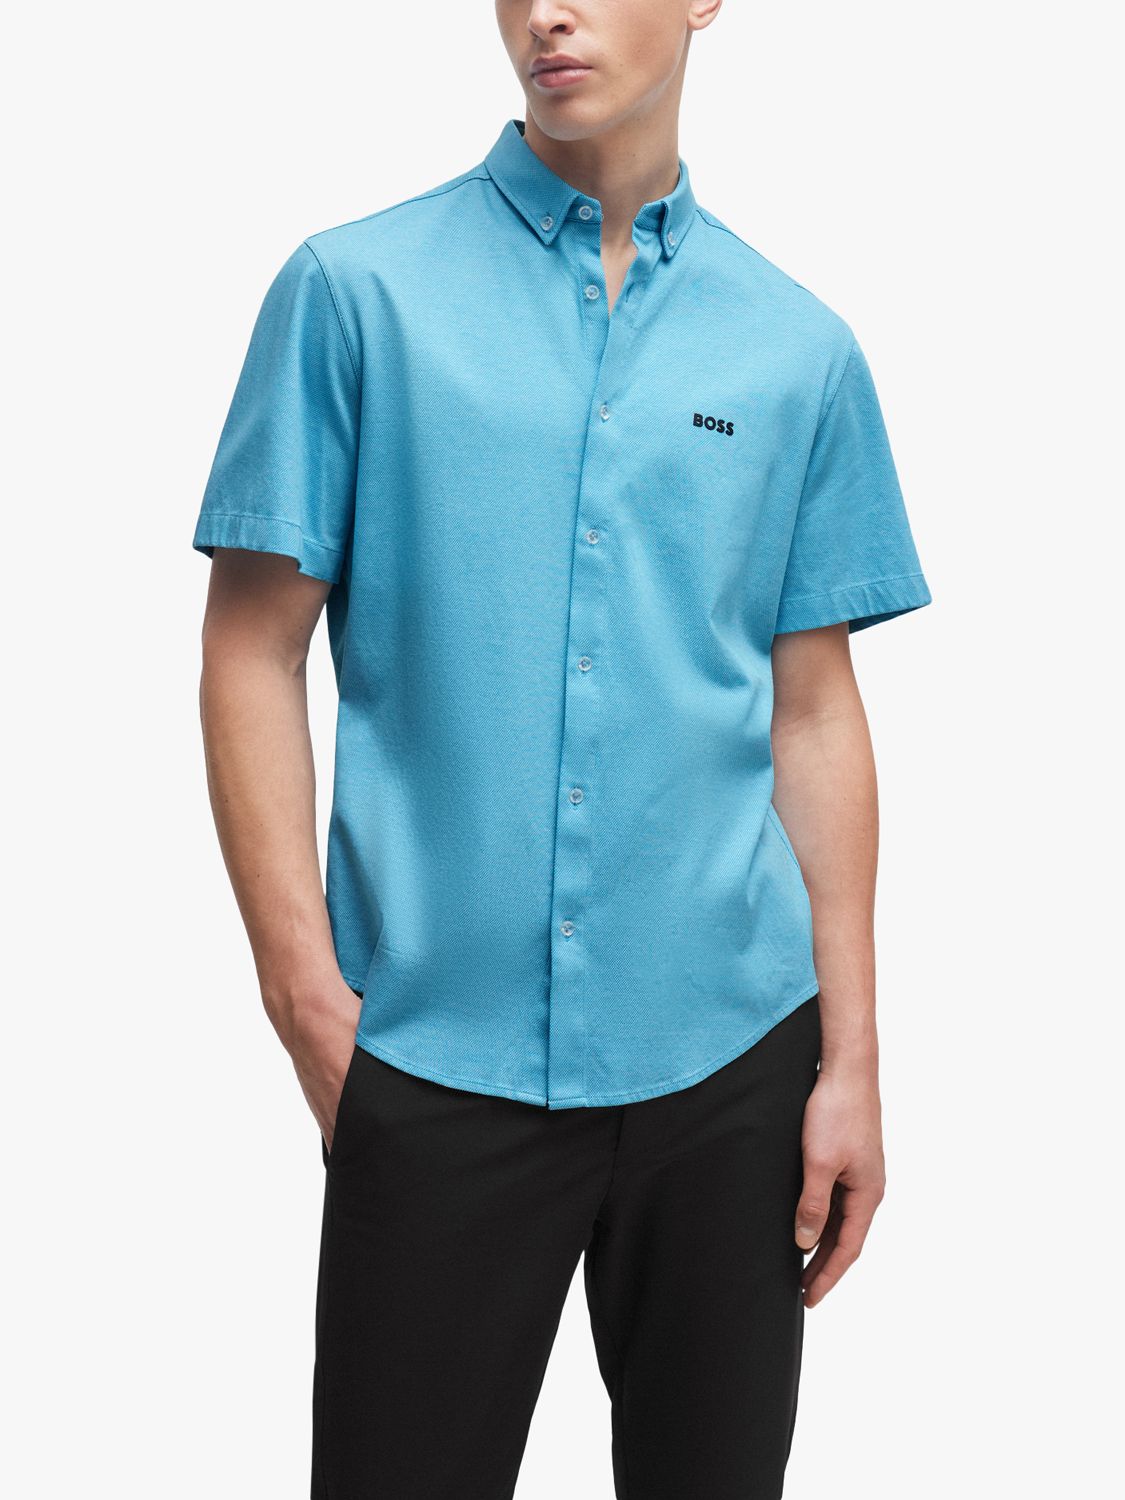 BOSS Motion Short Sleeve Cotton Shirt, Turquoise, M